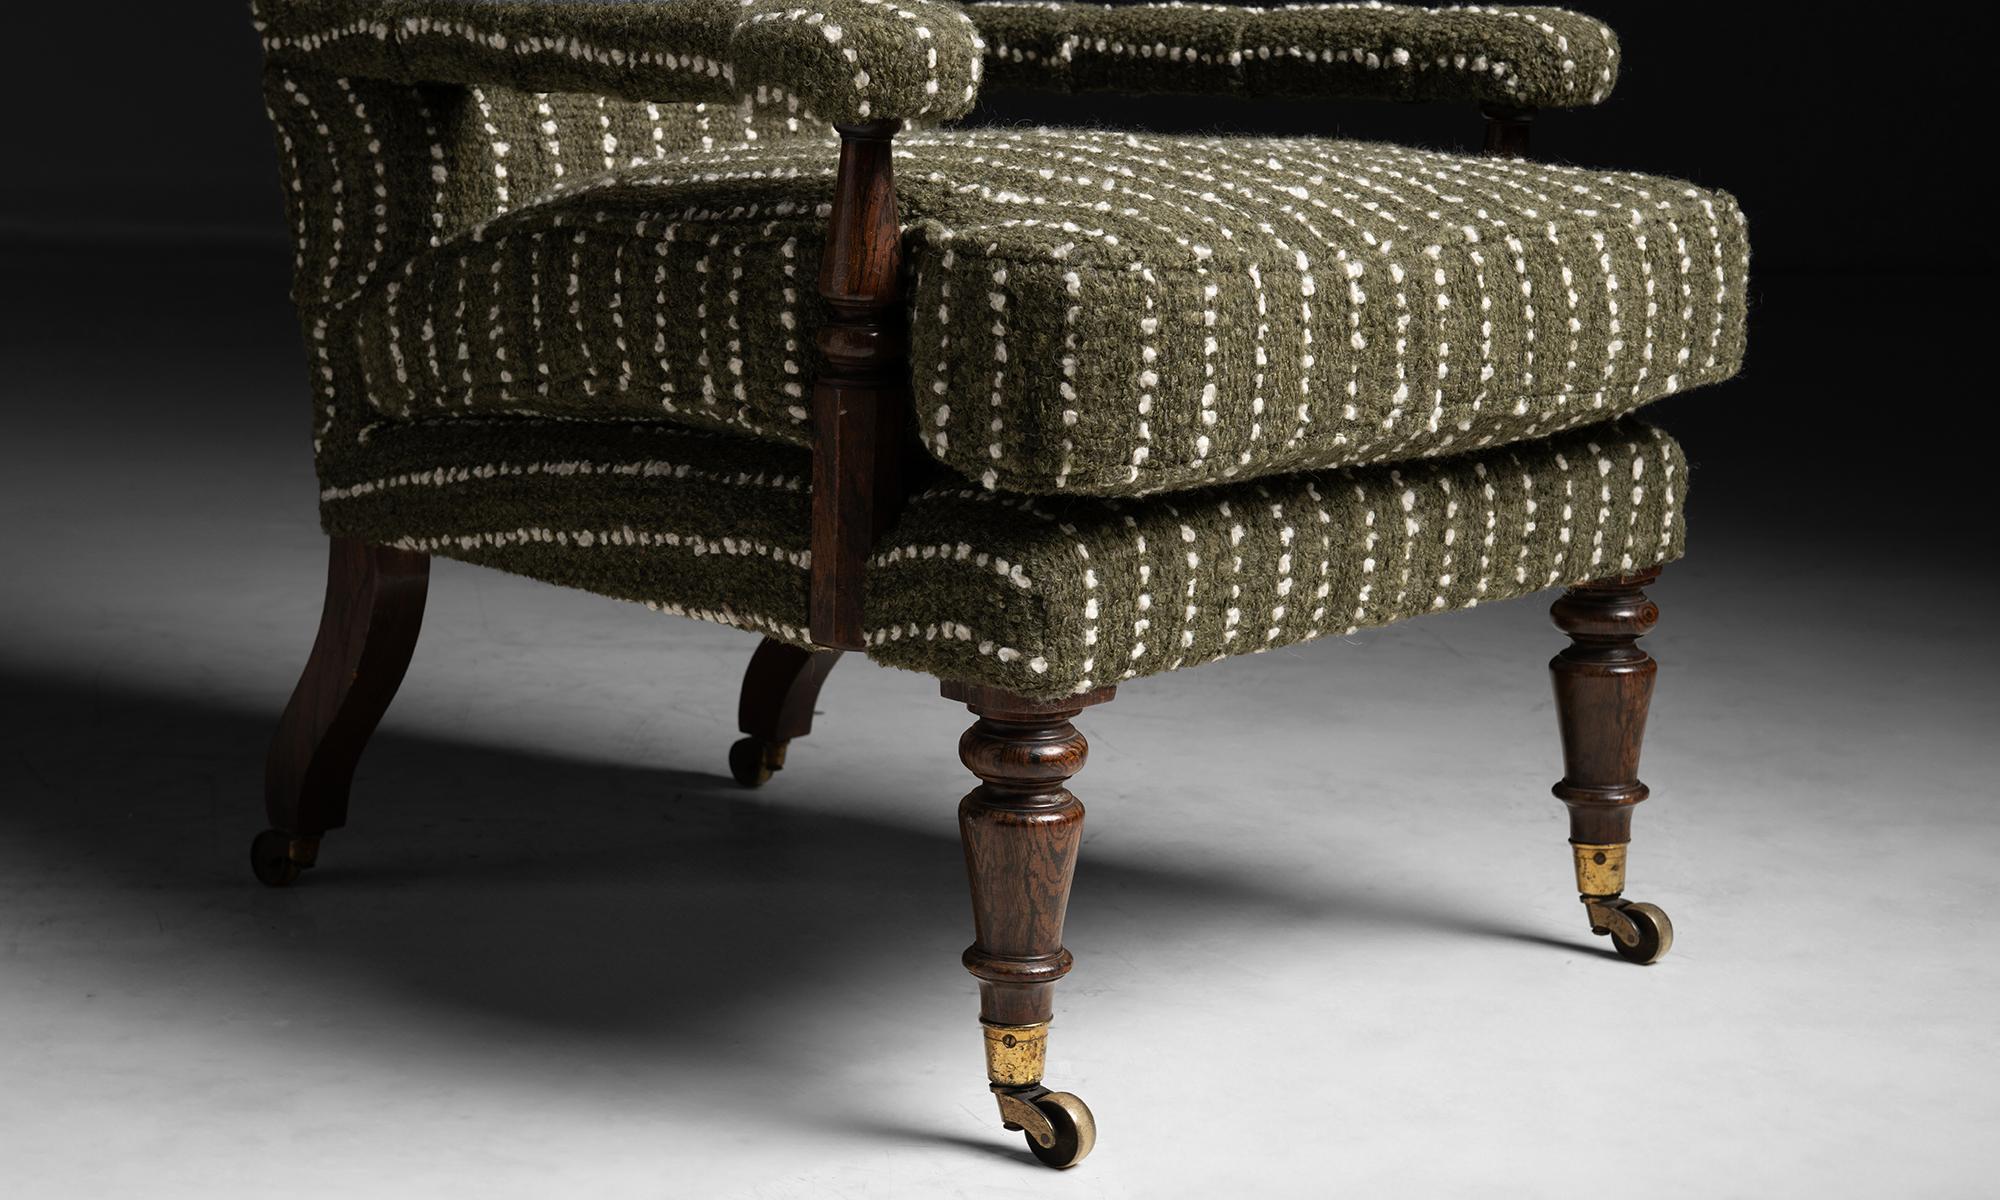 English Miles & Edwards Armchair in Rosemary Hallgarten Fabric Circa 1840